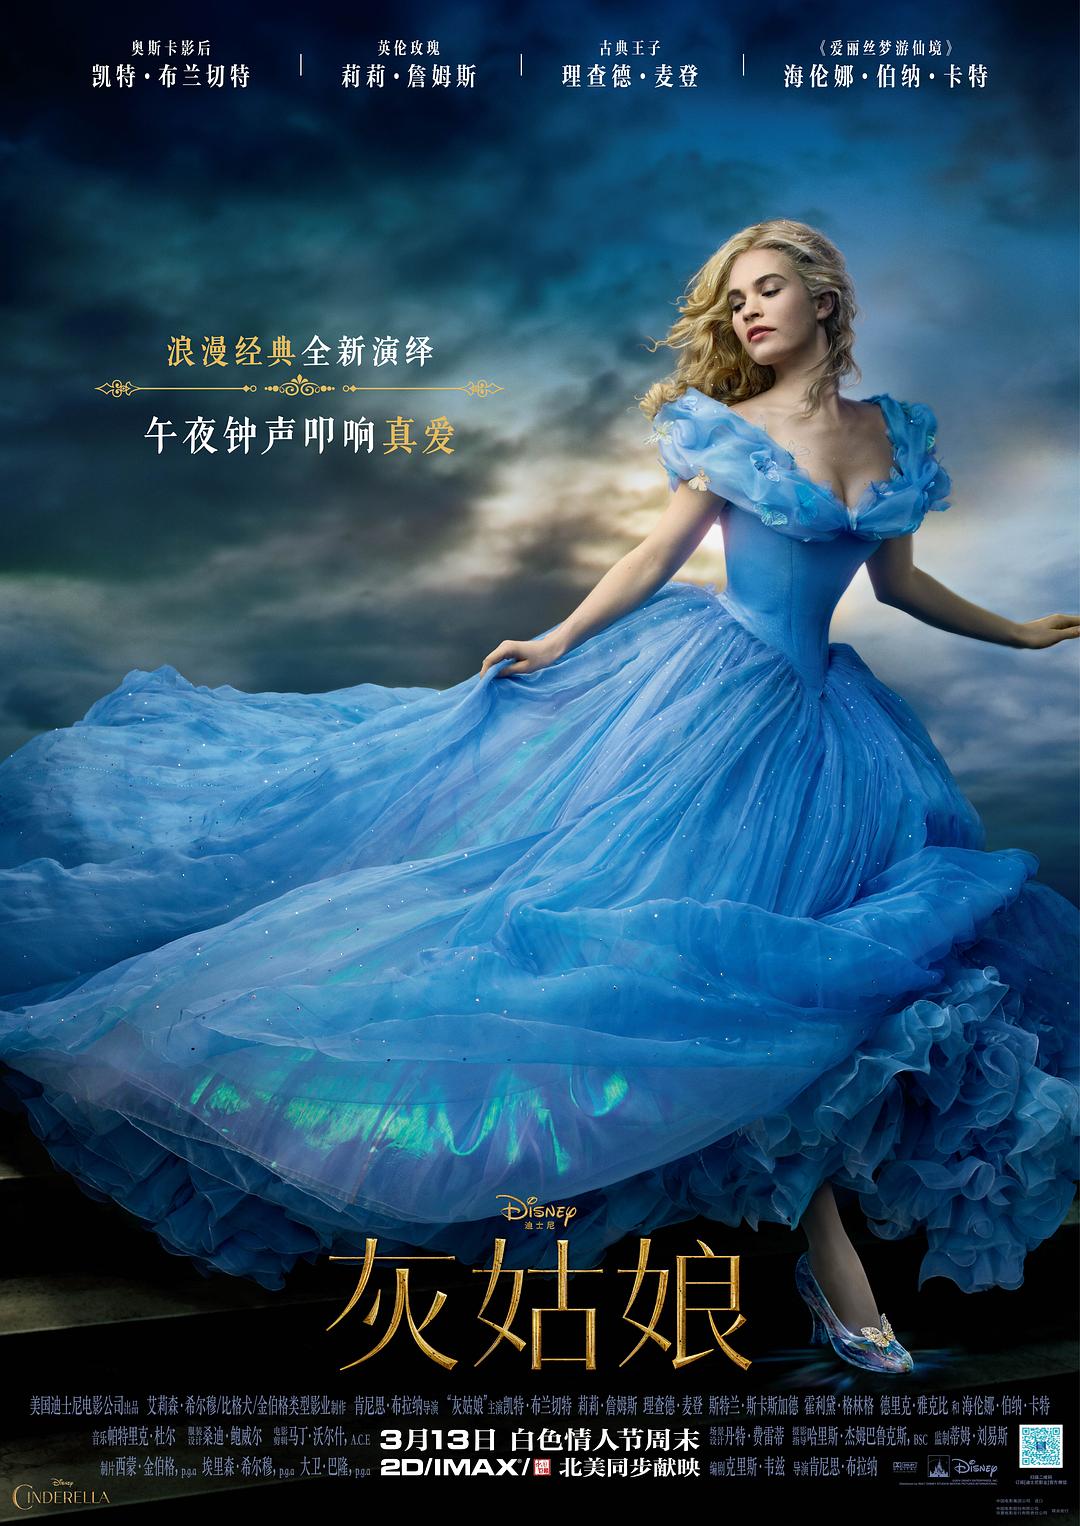 灰姑娘/仙履奇缘 Cinderella.2015.2160p.BluRay.REMUX.HEVC.DTS-HD.MA.TrueHD.7.1.Atmos-FGT 56.97GB-1.png